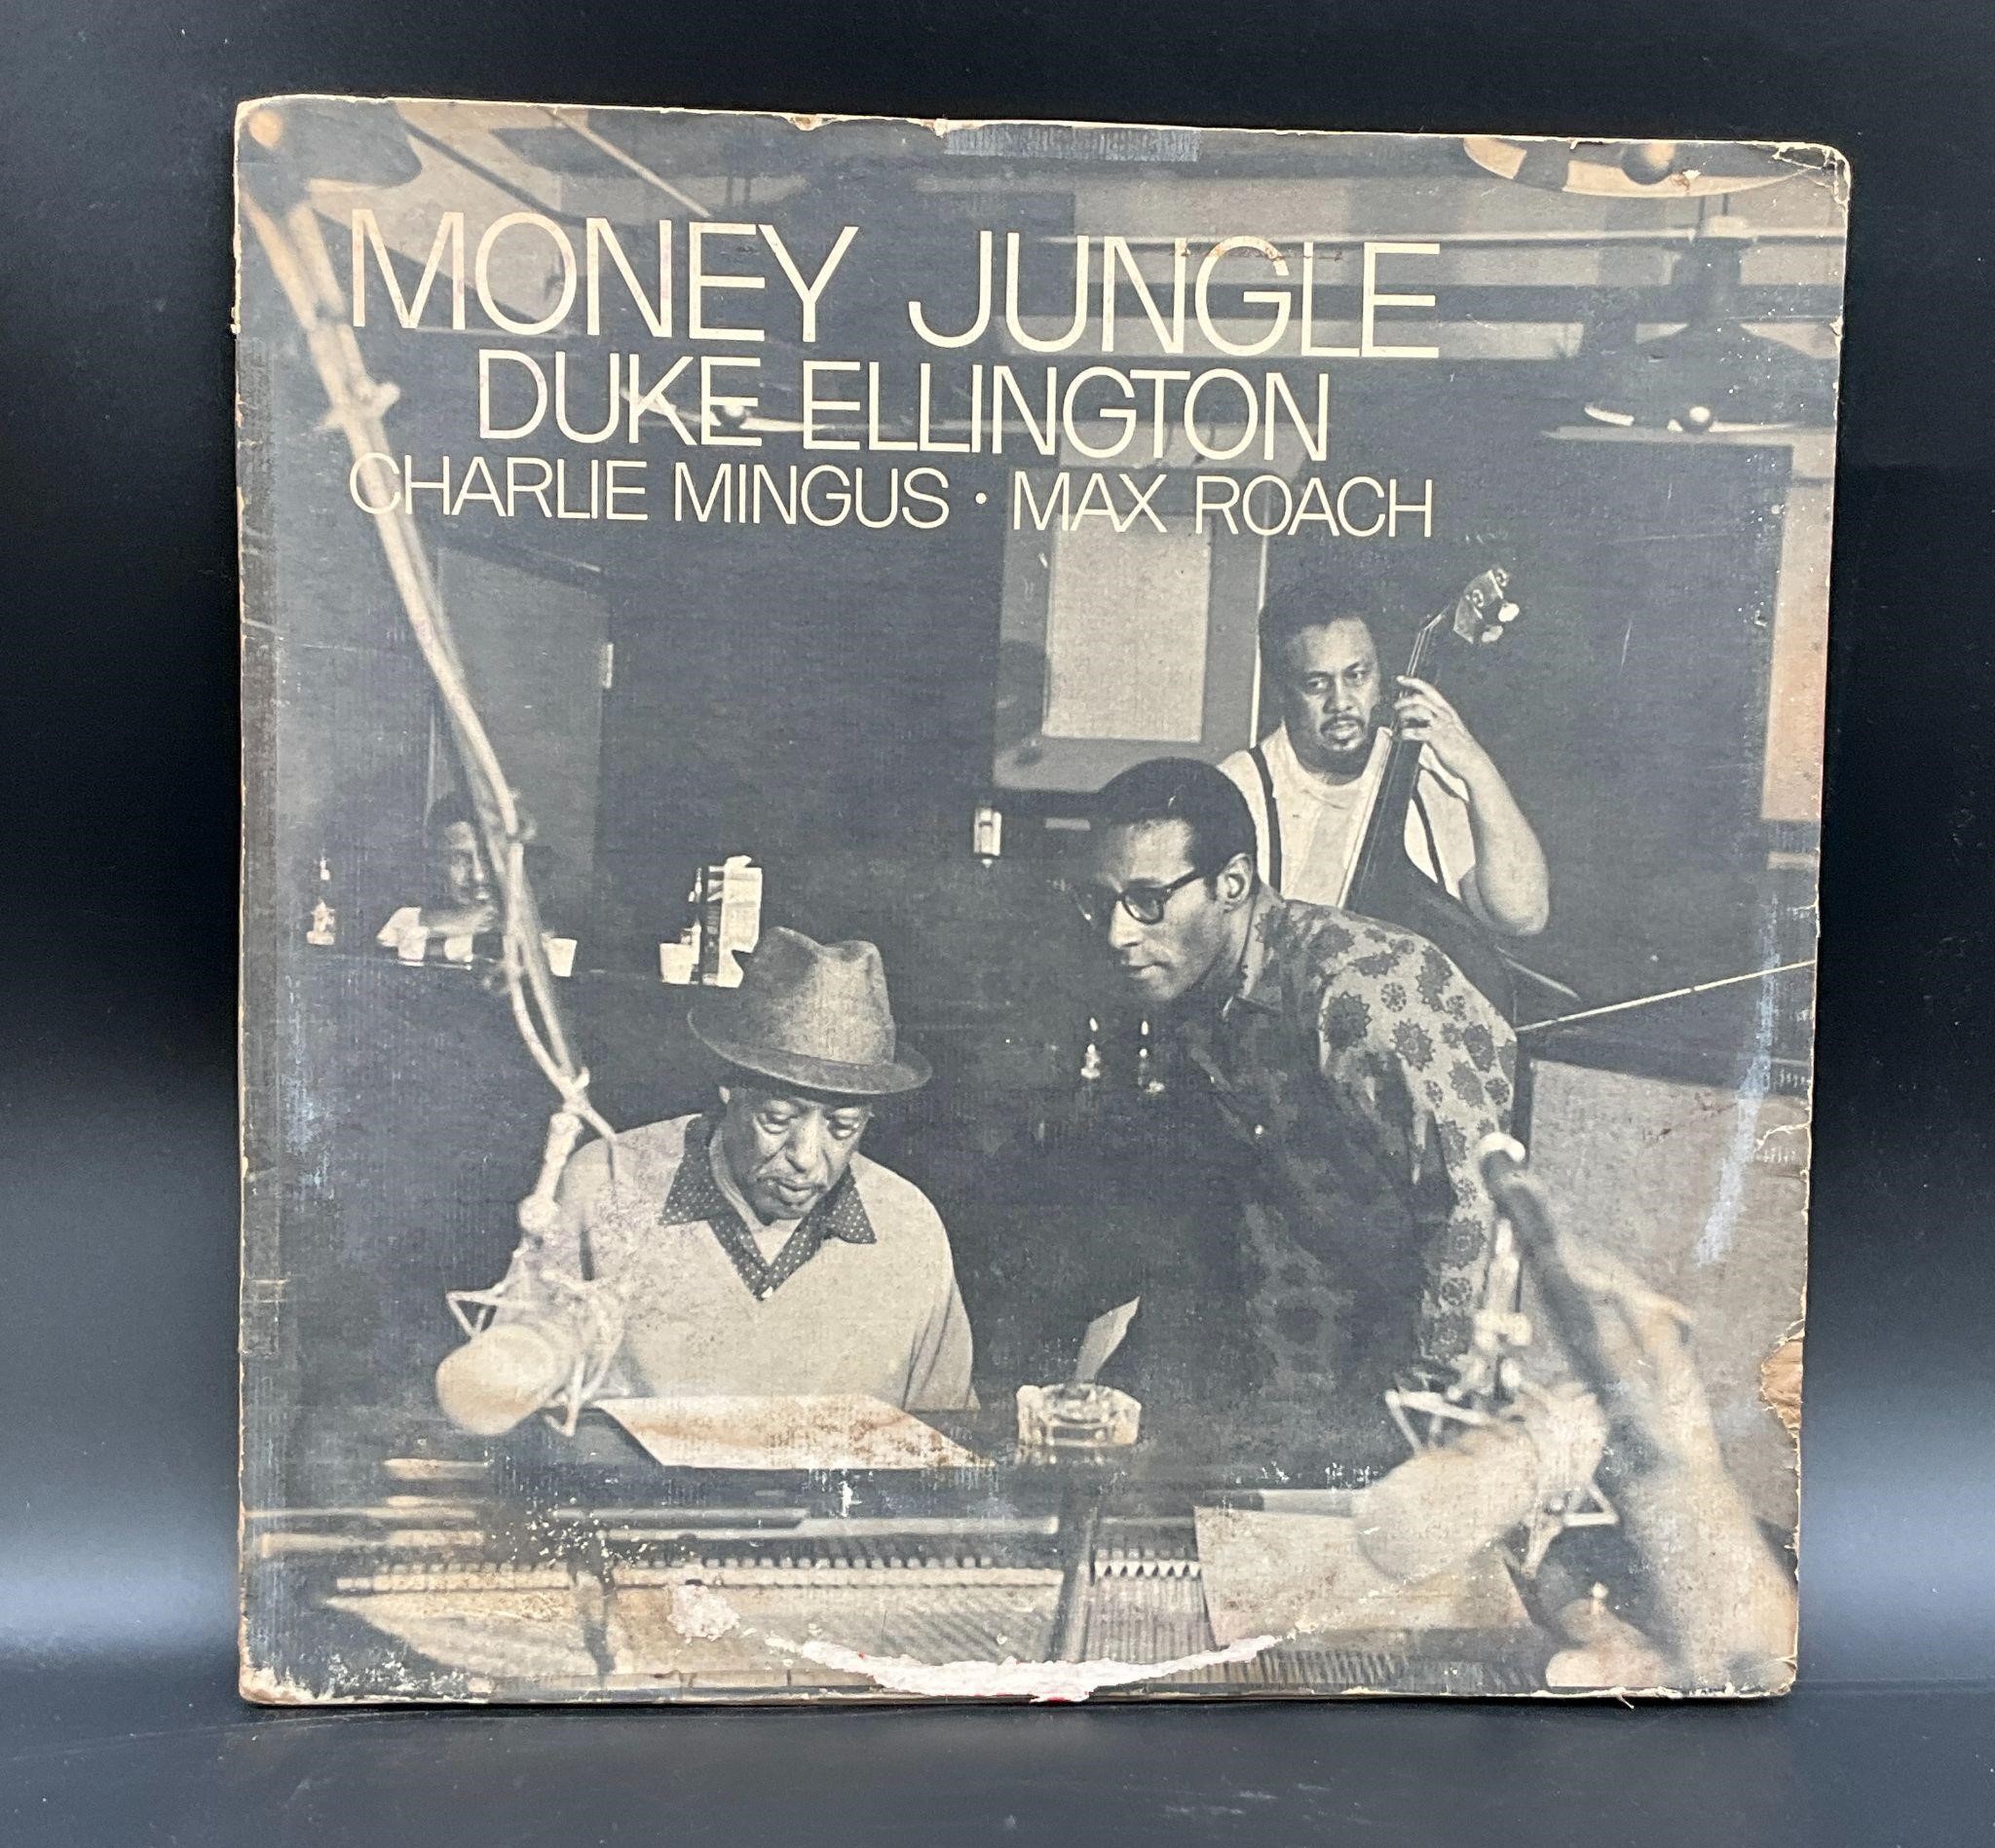 Original 1962 Duke Ellington "Money Jungle" LP